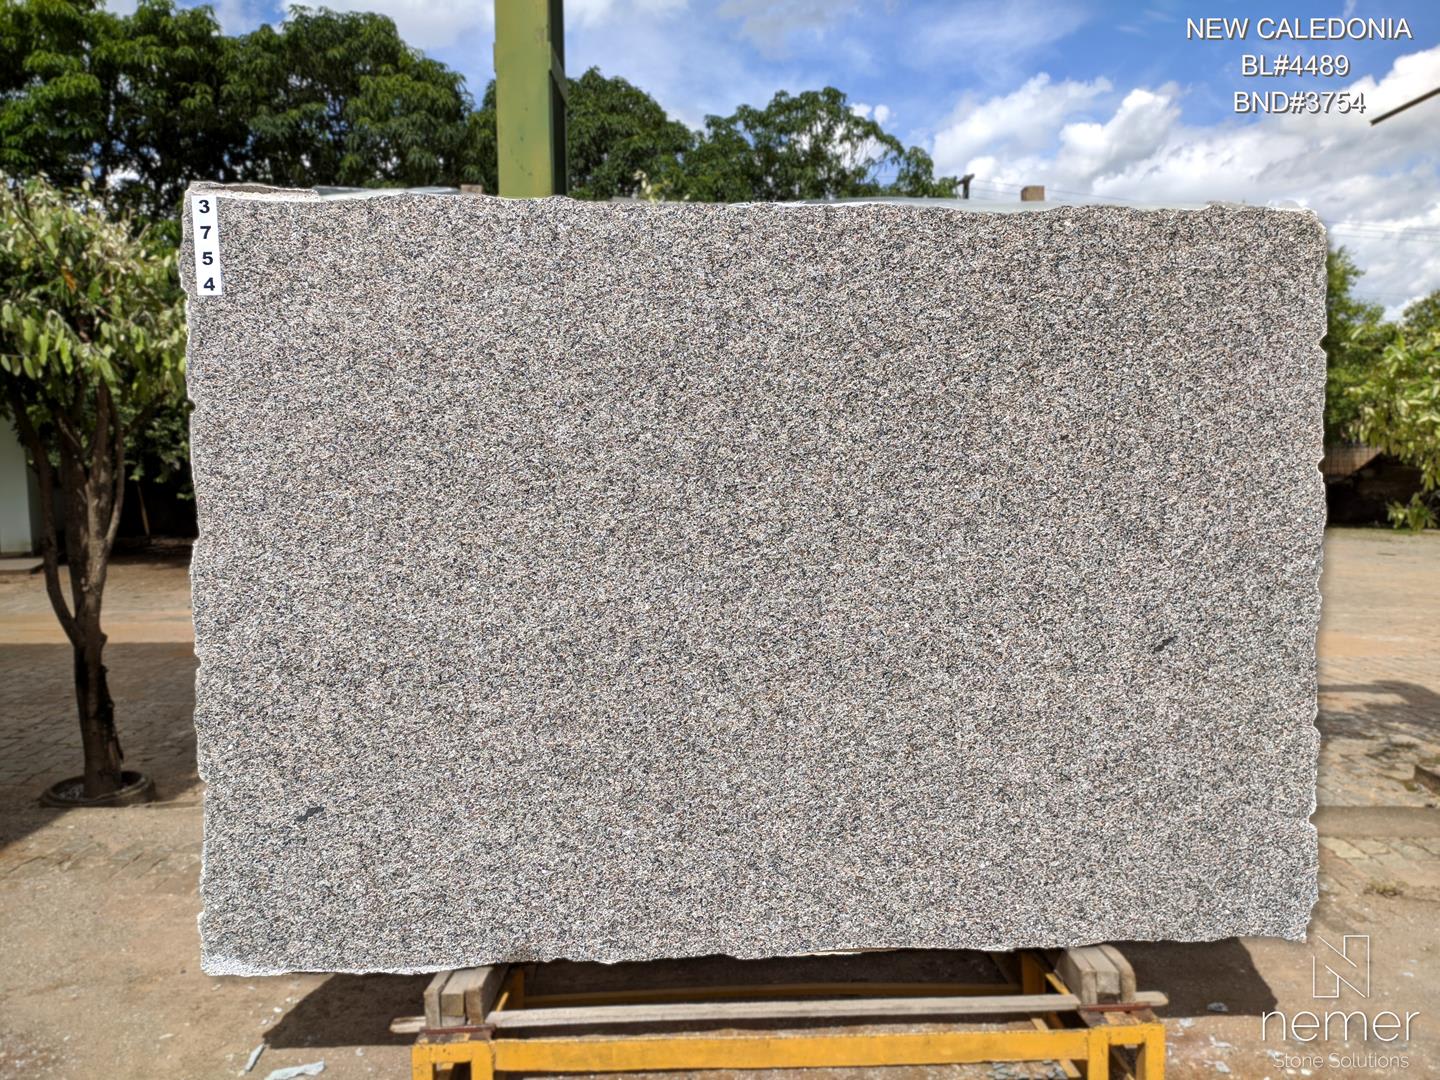 New Caledonia Granite - Schillings